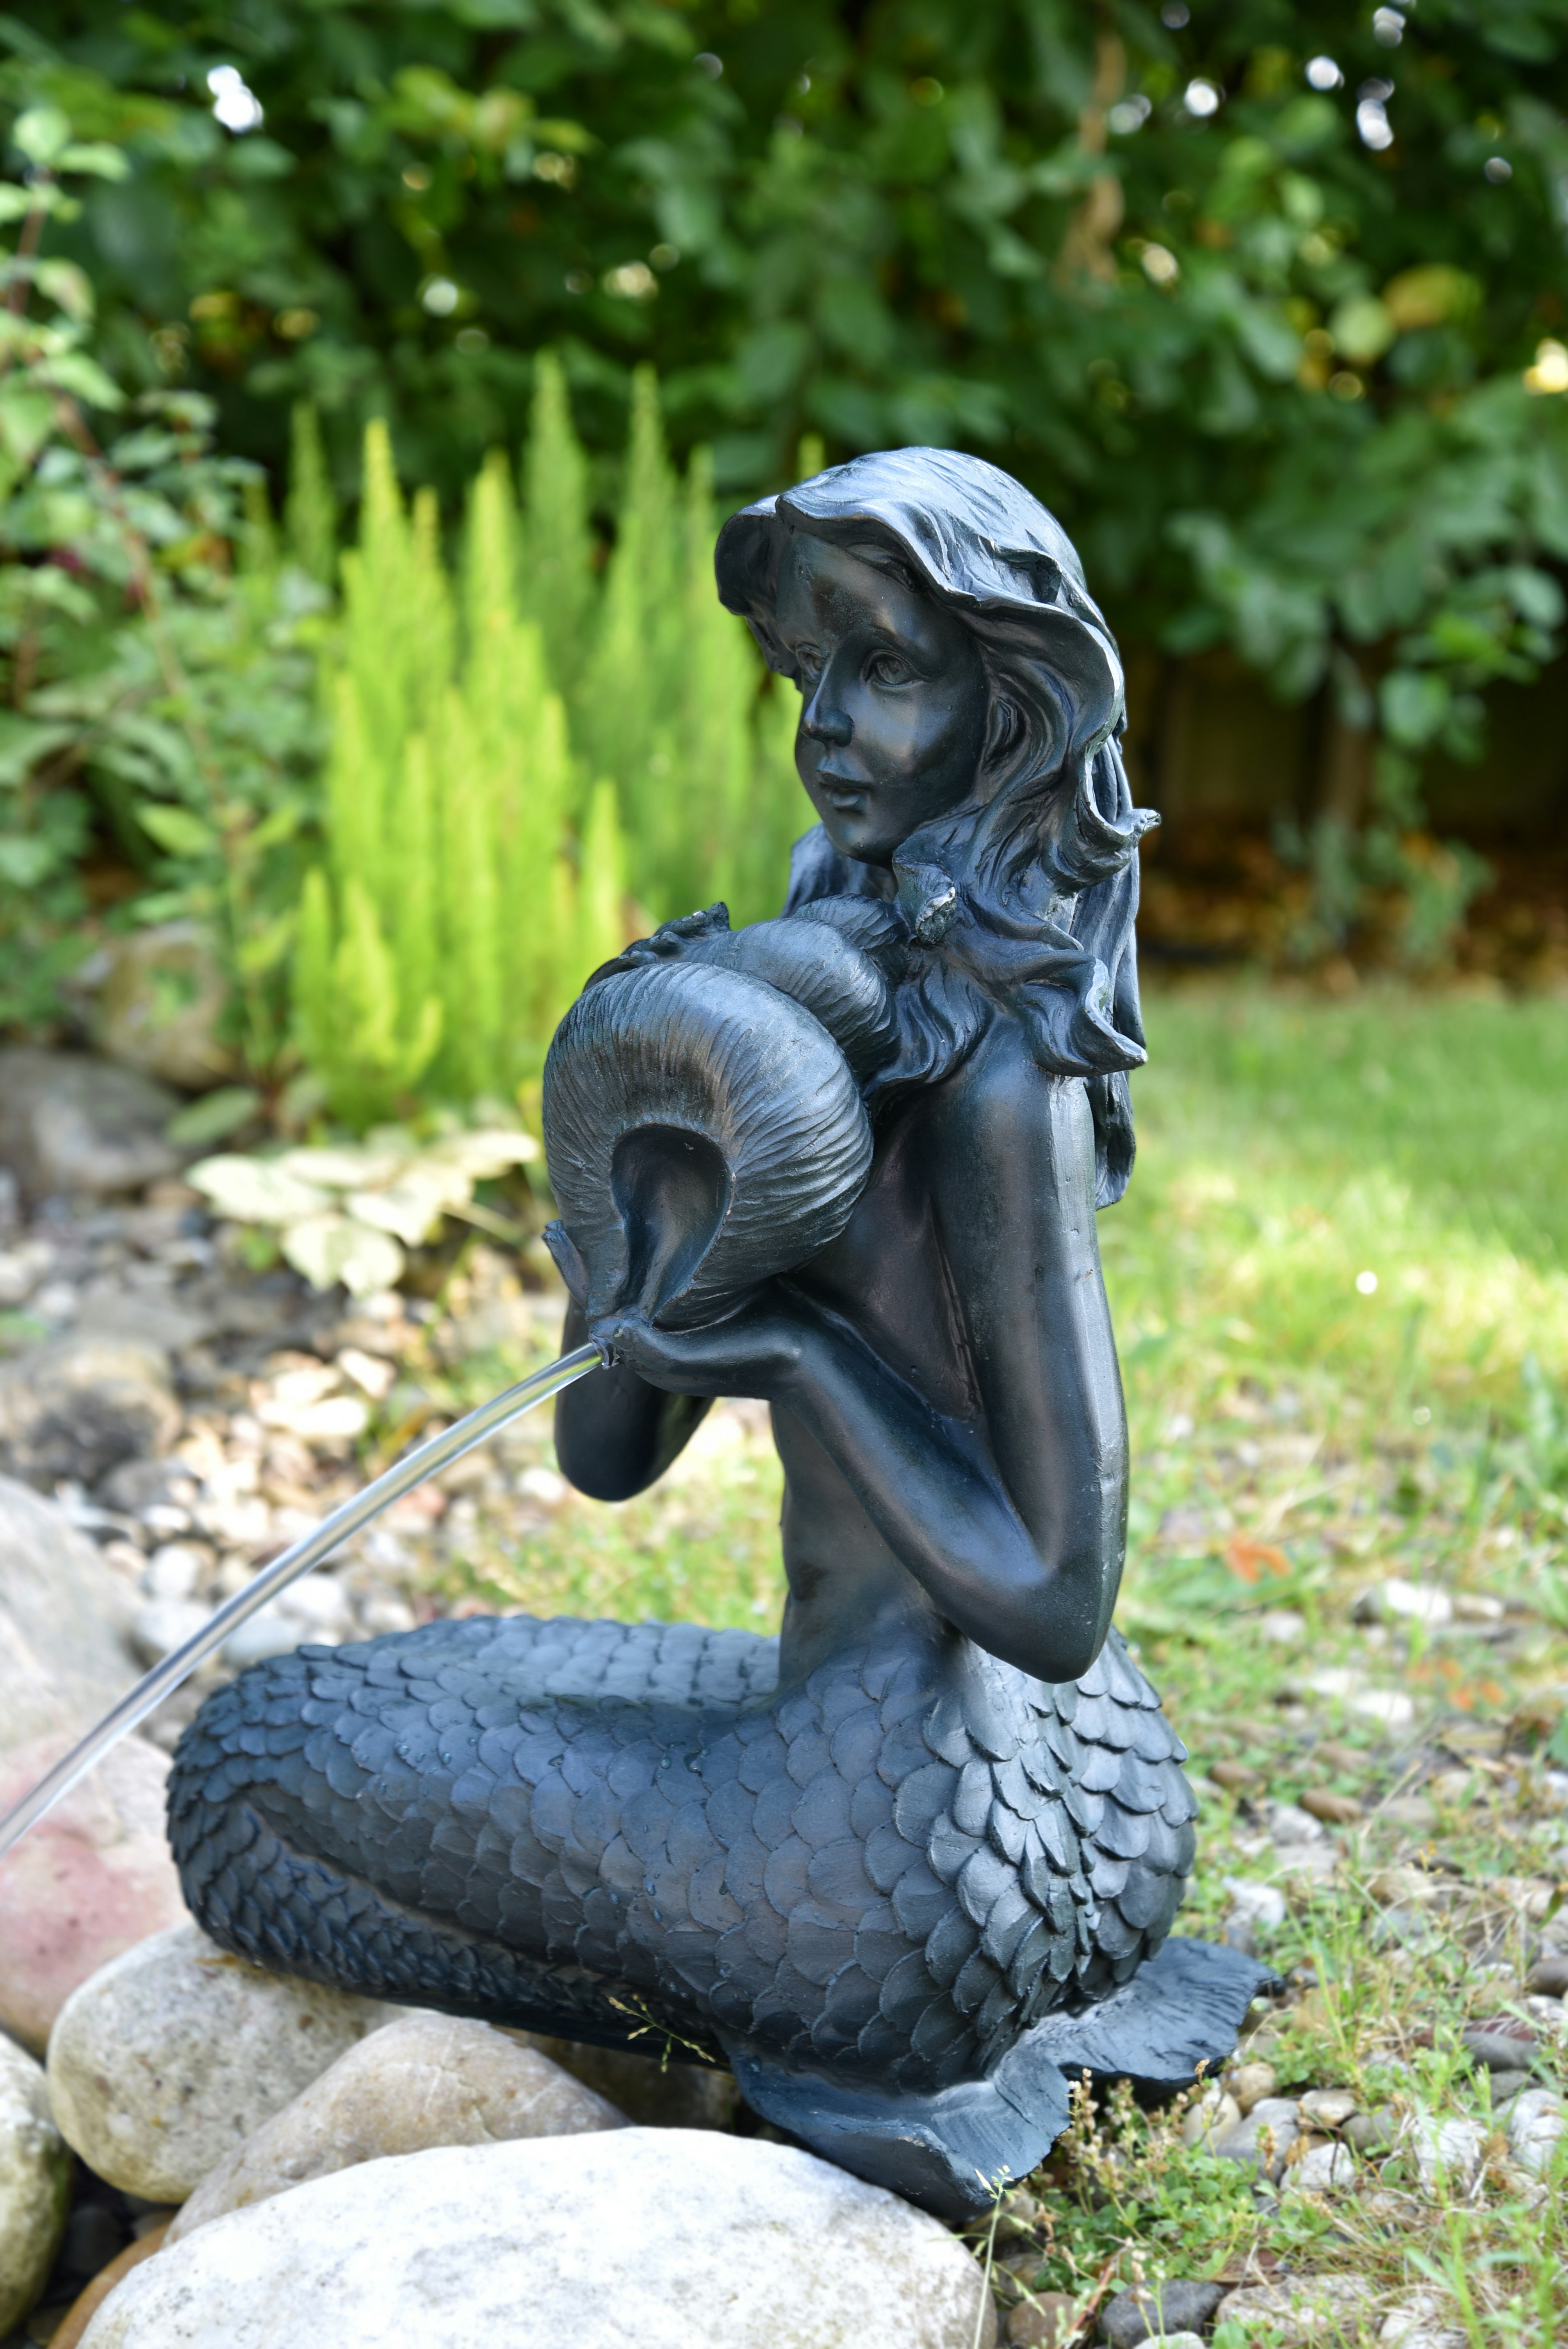 Heissner Teichfigur "Meerjungfrau mit Amphore", 39x26x54cm